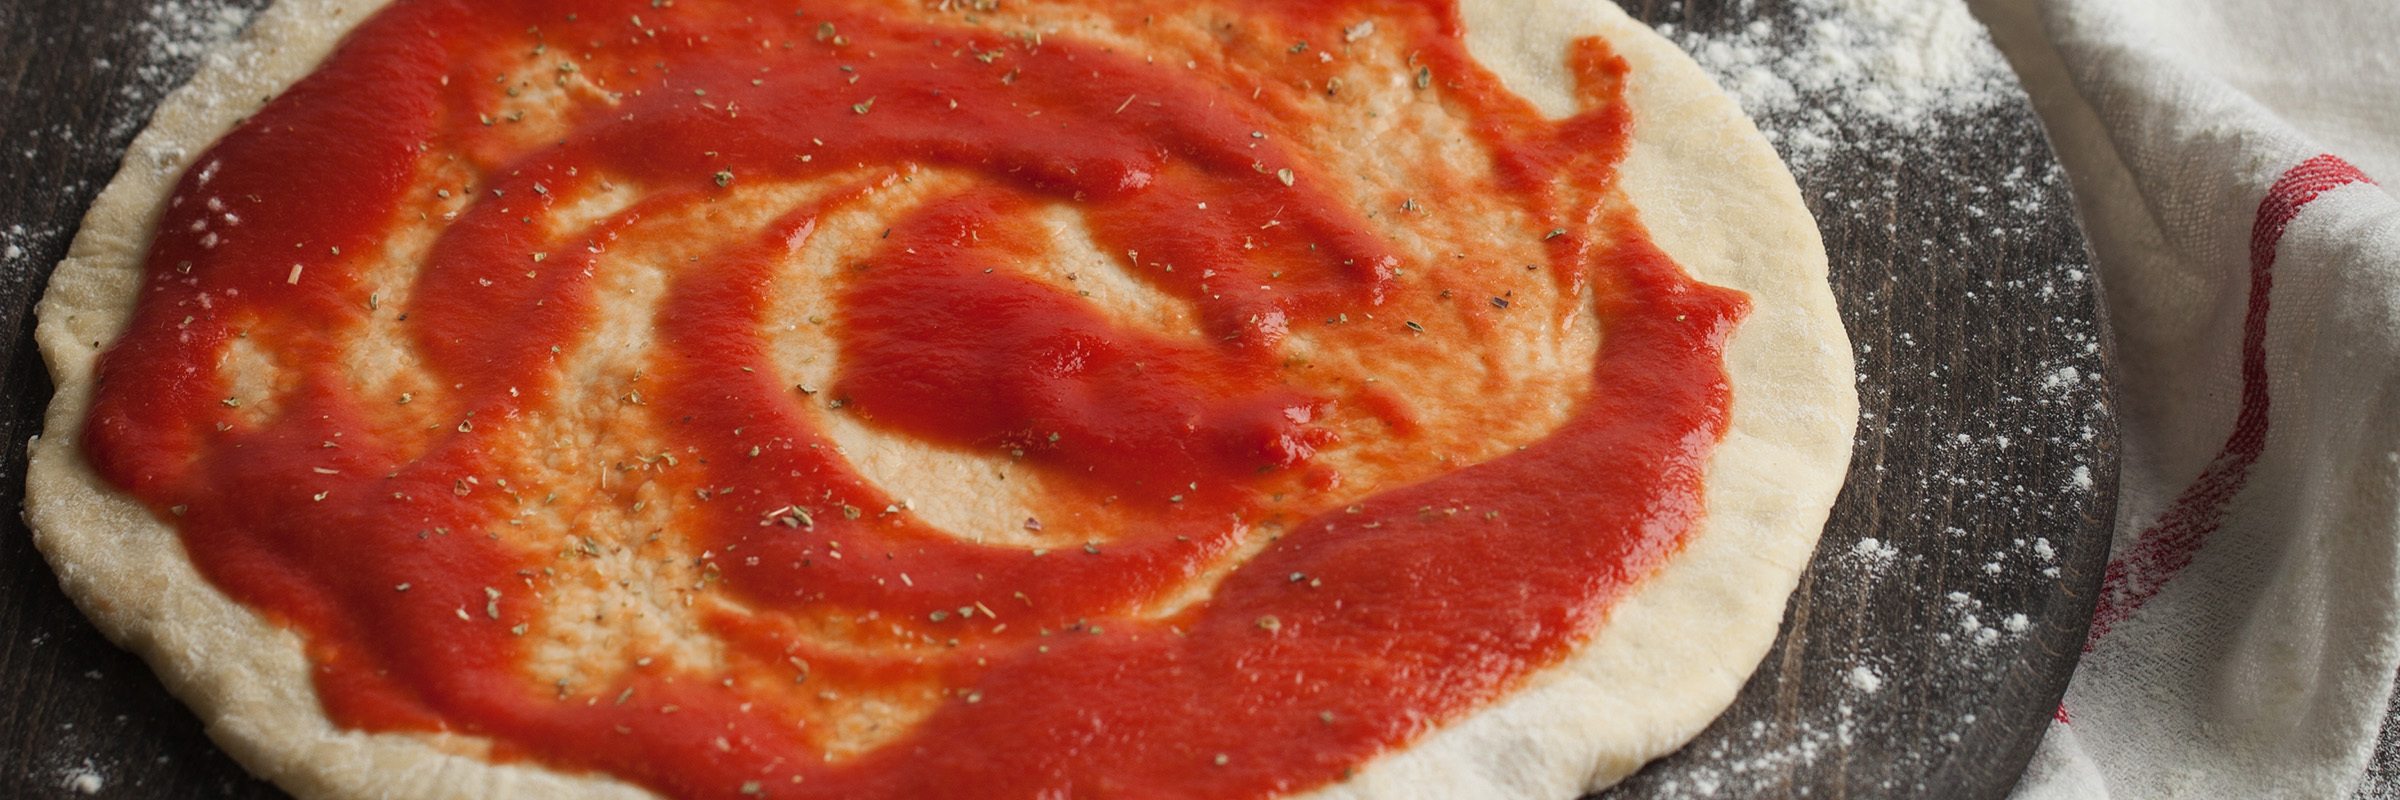 Franchise Snappy Tomato Pizza